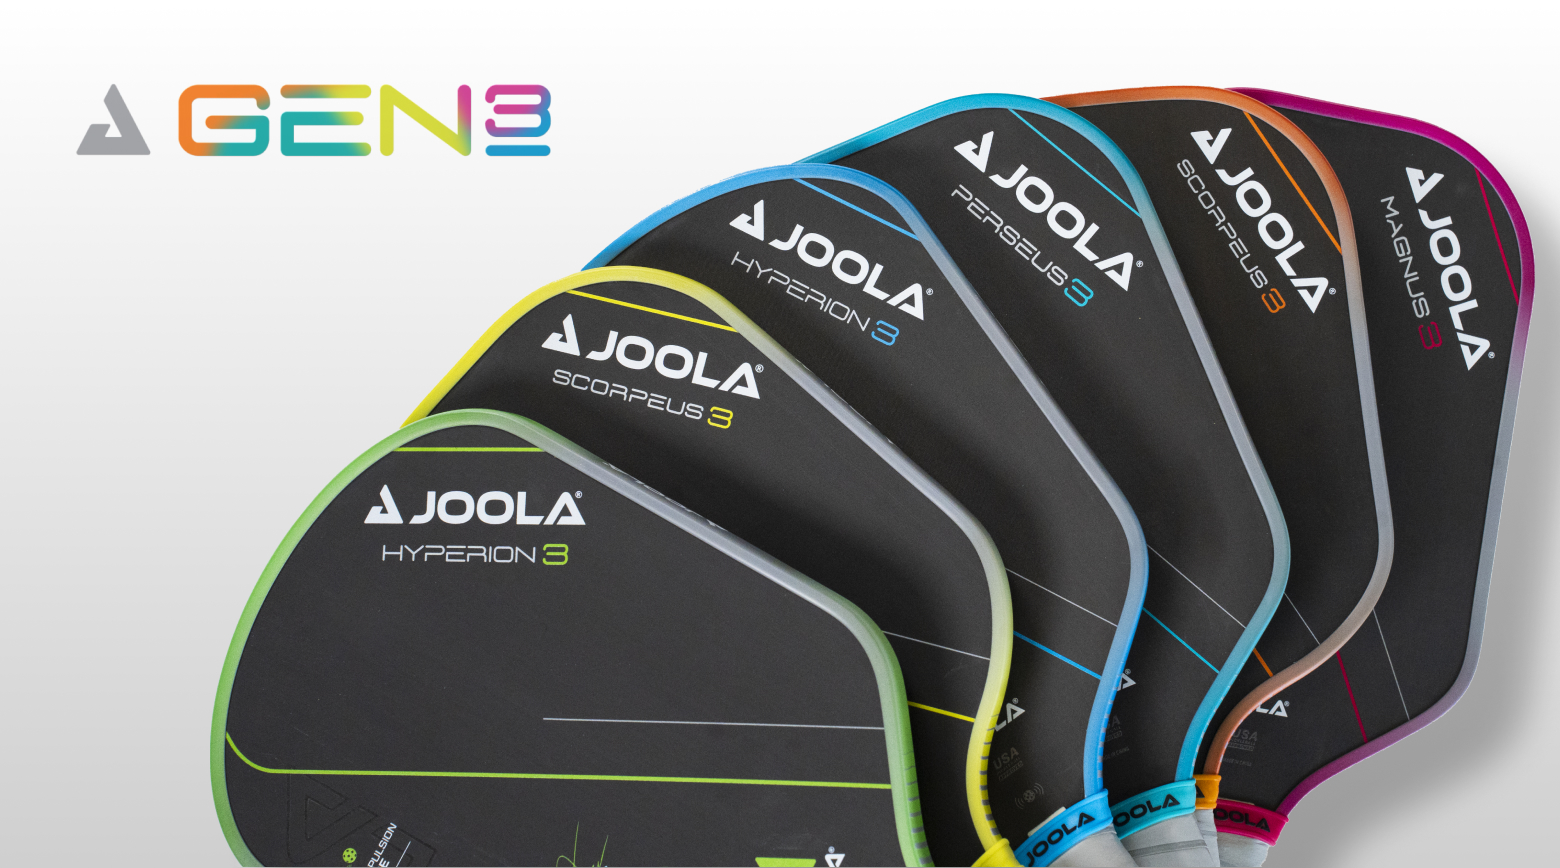 JOOLA Launches Gen 3 Paddle Line-Up Featuring Revolutionary Technology -  JOOLA USA